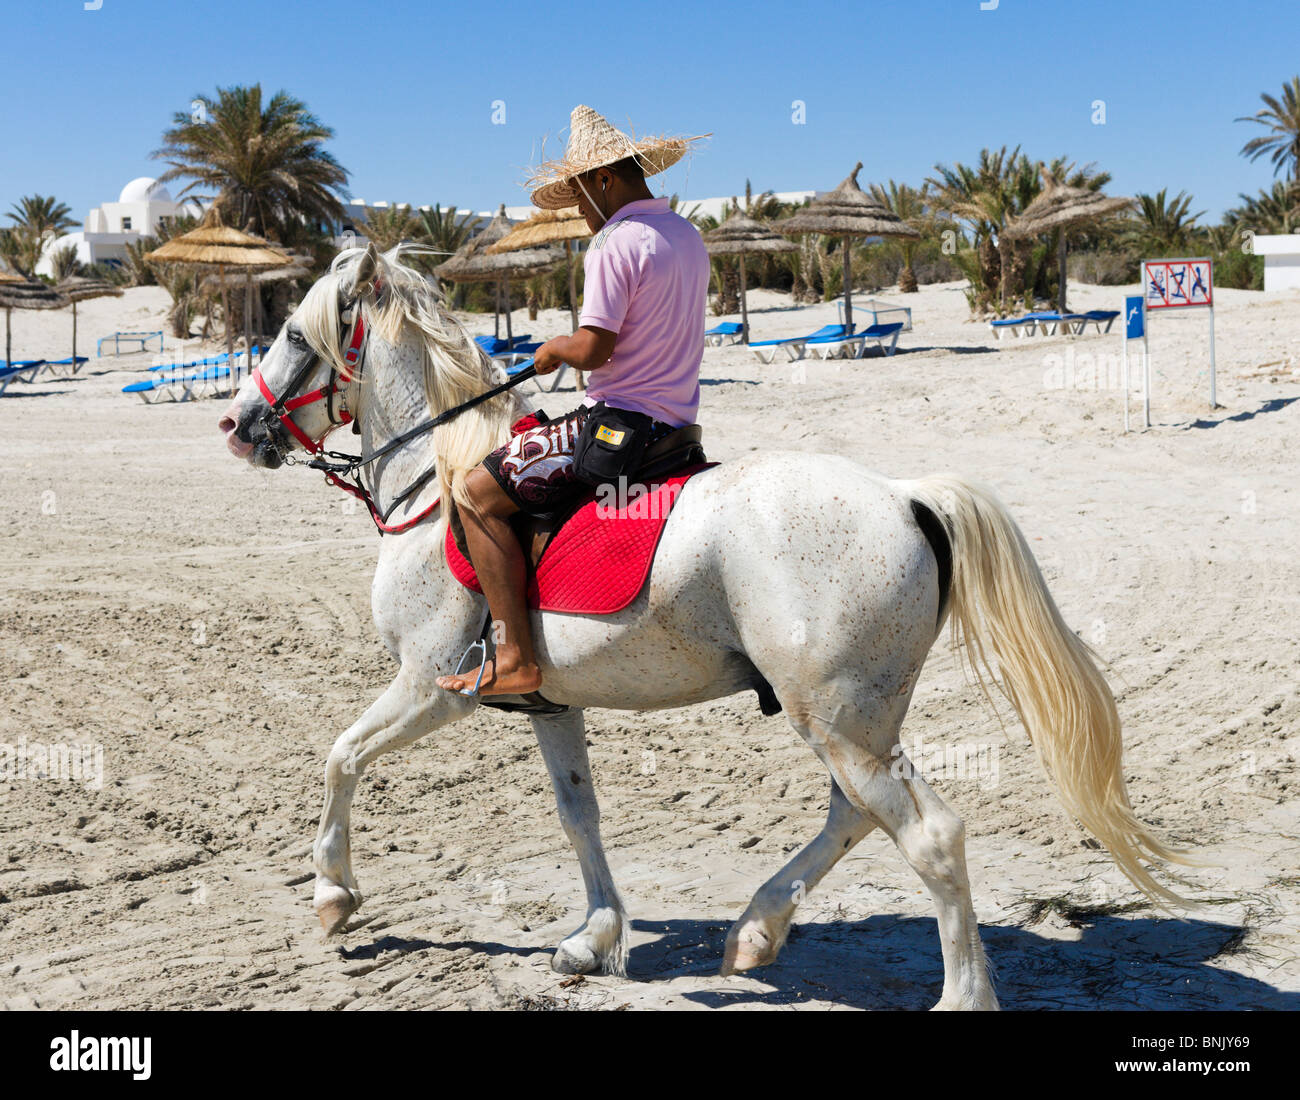 Horseback riding on the beach in the hotel zone, Aghir, Djerba, Tunisia Stock Photo